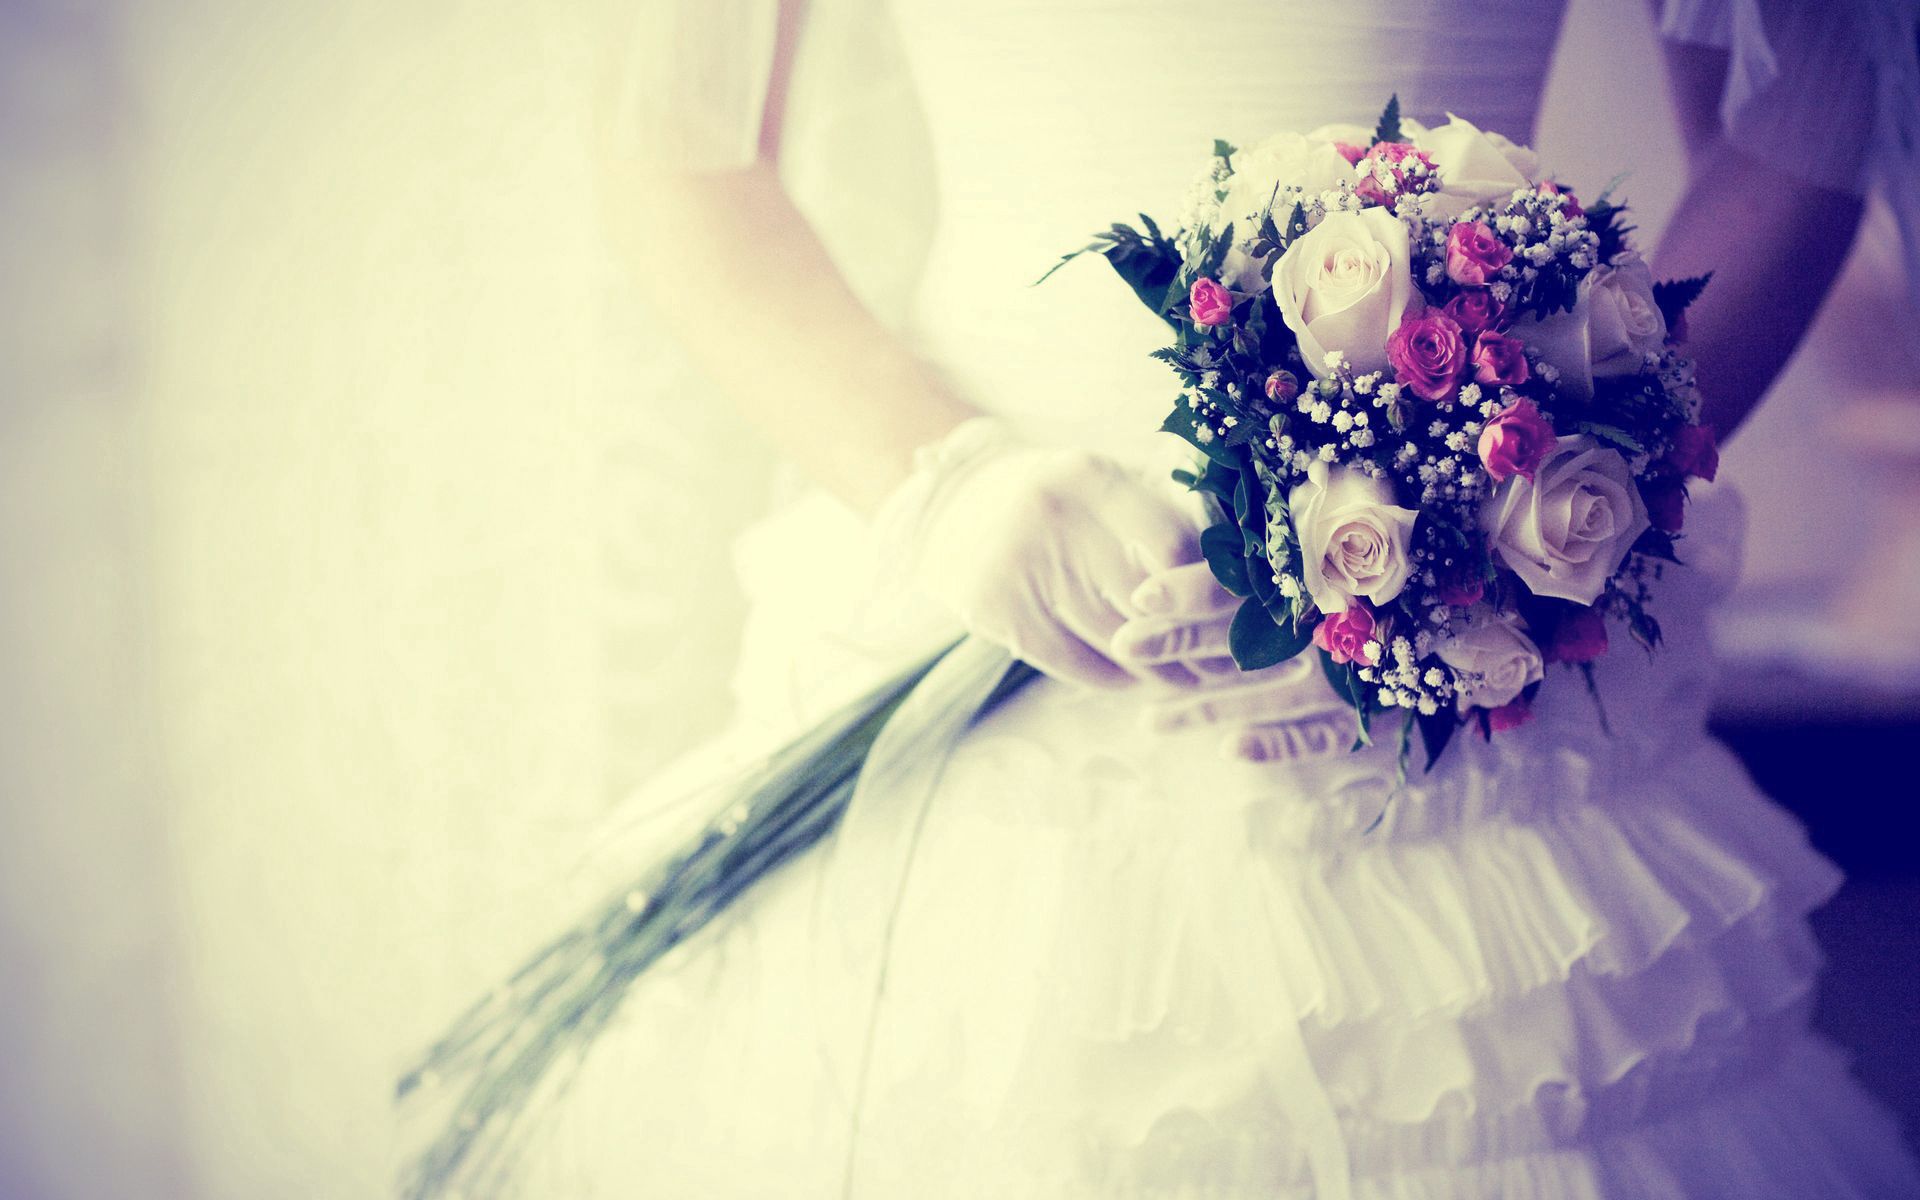 136505 descargar imagen flores, amor, boda, ramo, guantes, novia: fondos de pantalla y protectores de pantalla gratis